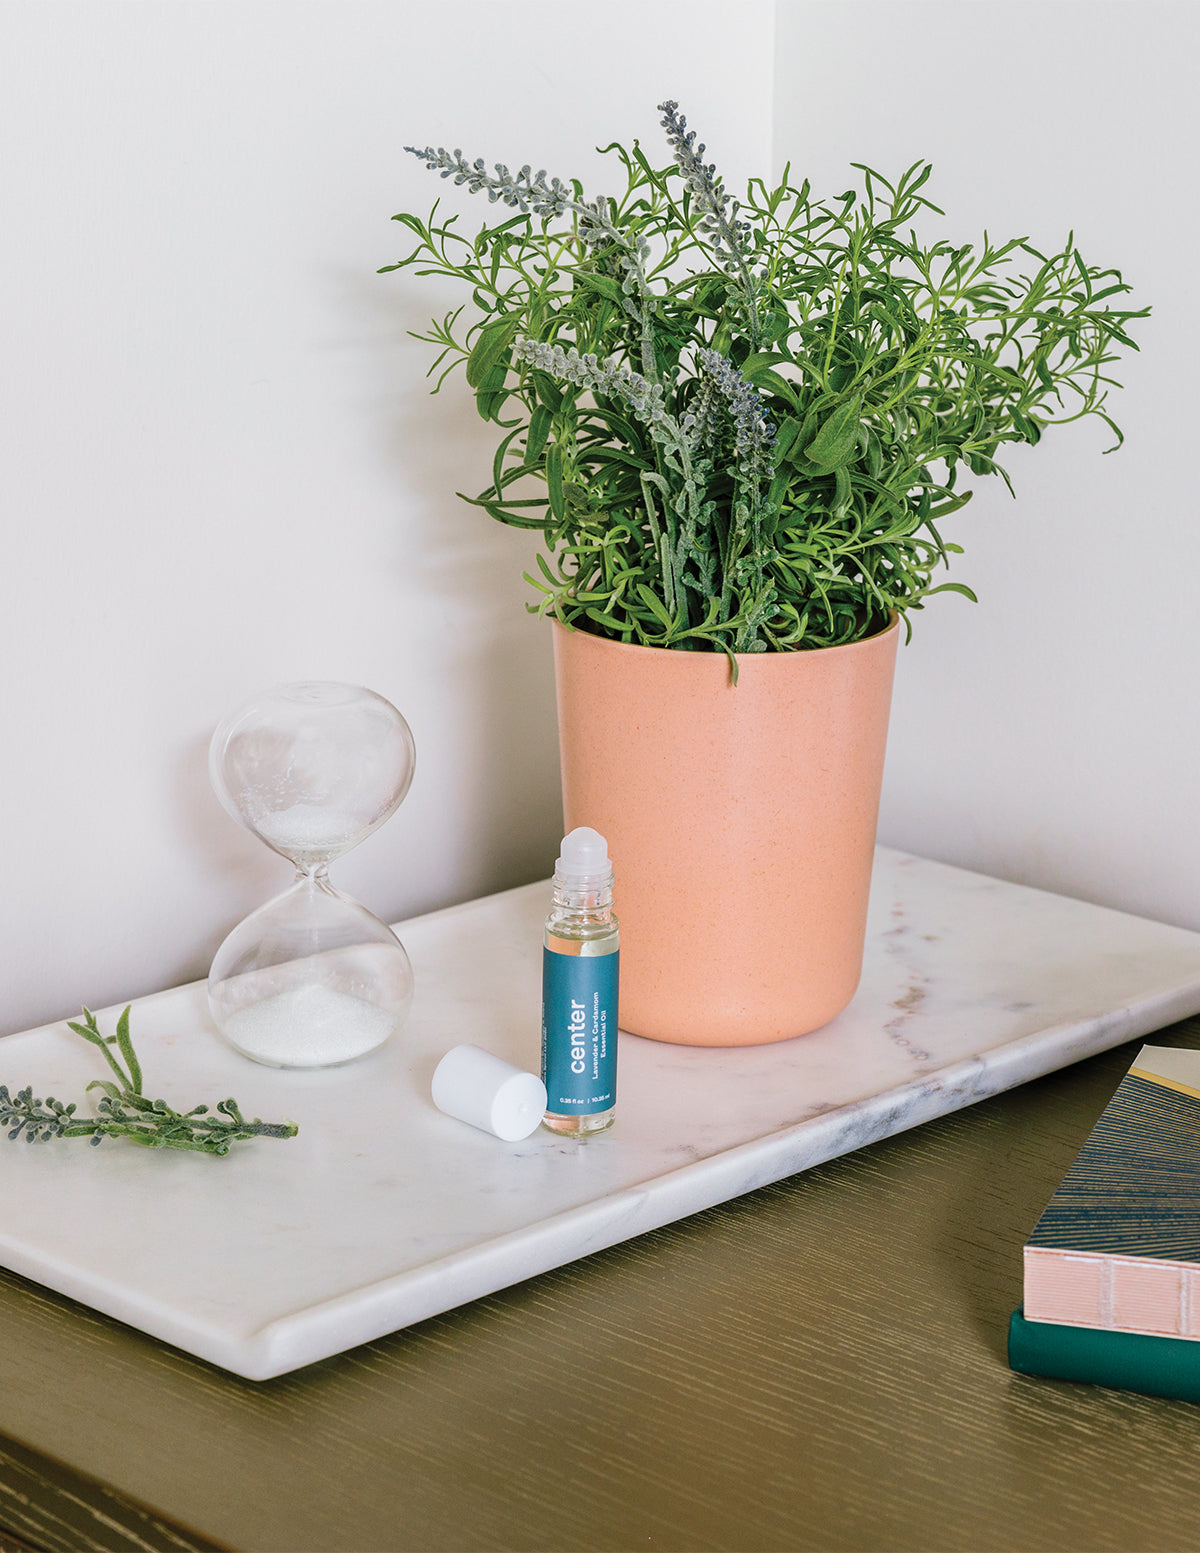 Mindful Meditation Lavender Kit, Houseplants and Gifts for Delivery